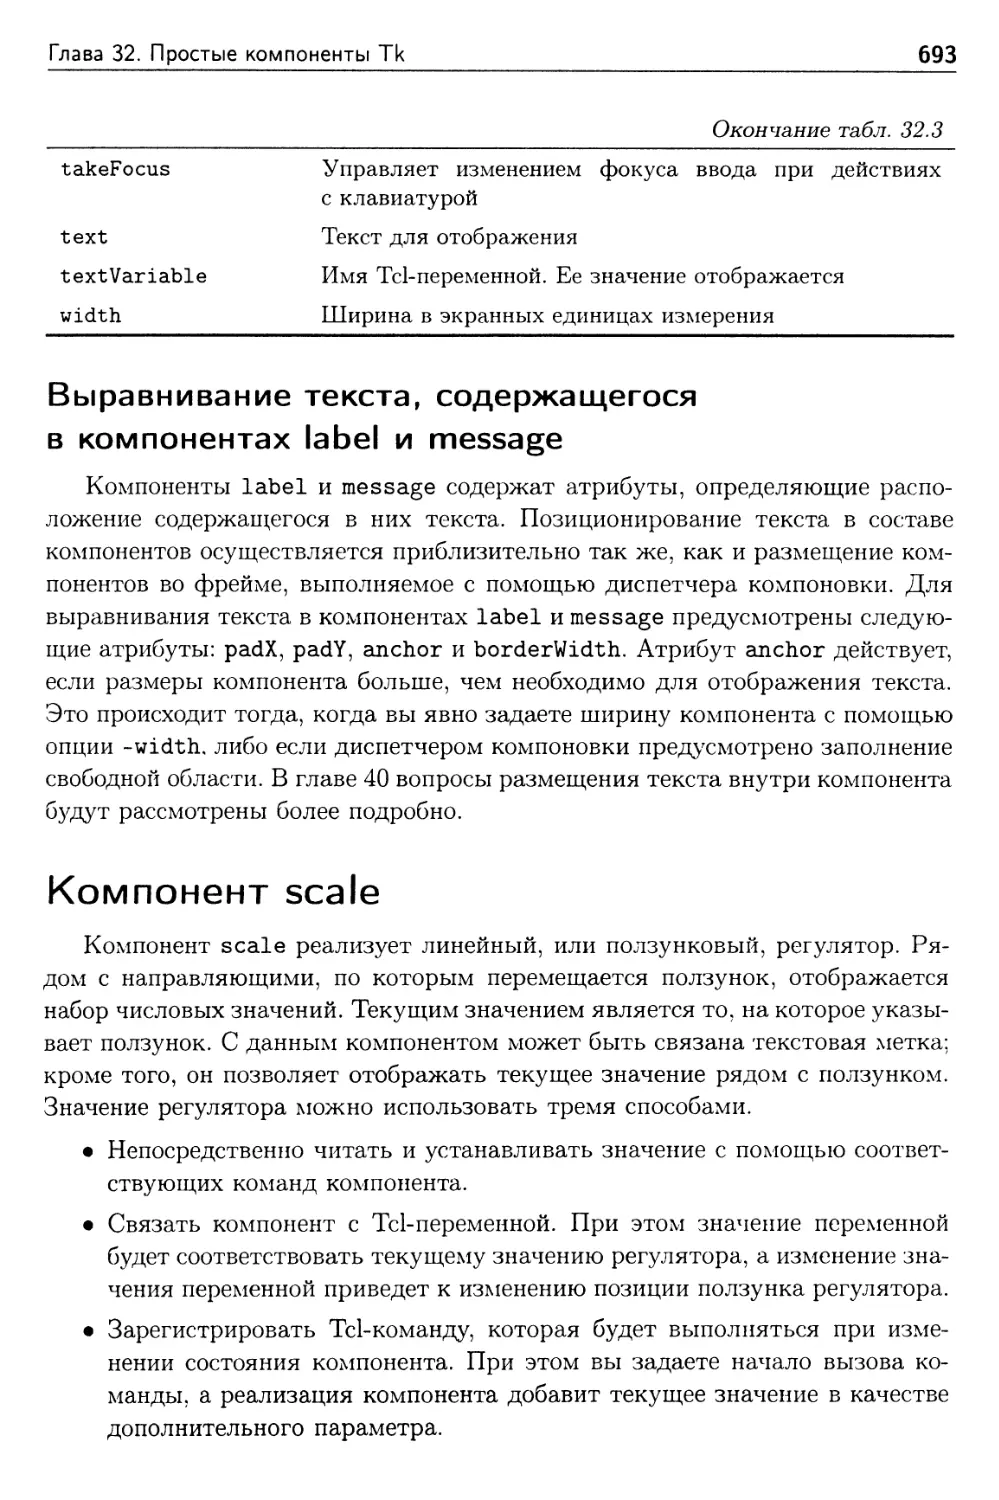 Выравнивание текста, содержащегося в компонентах label и message
Компонент scale